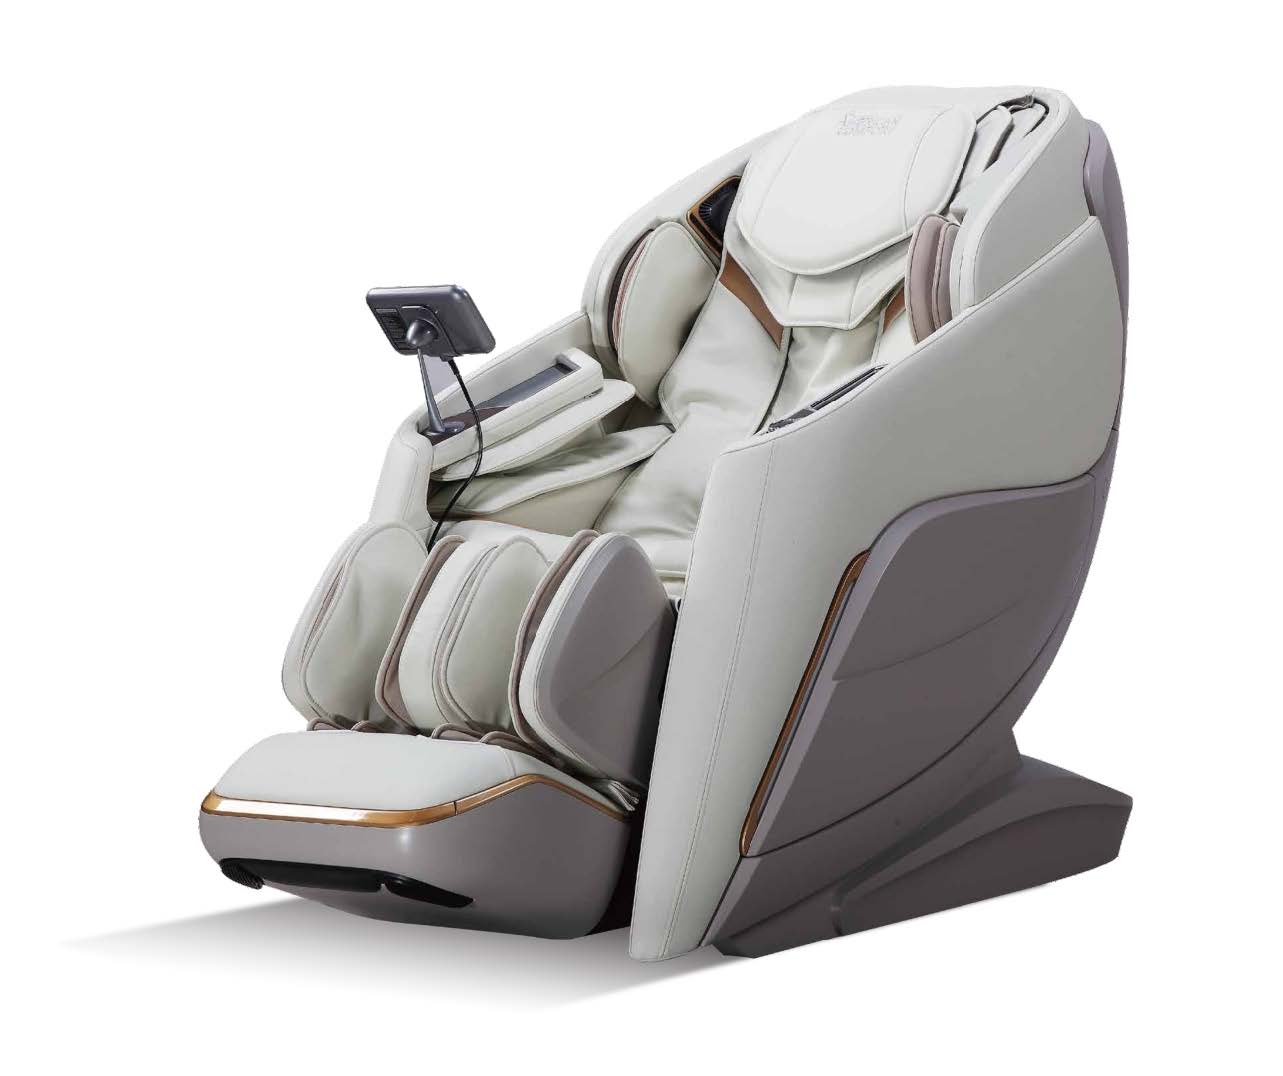 5D Massage Chair in palampur, 5D Massage Chair Manufacturers